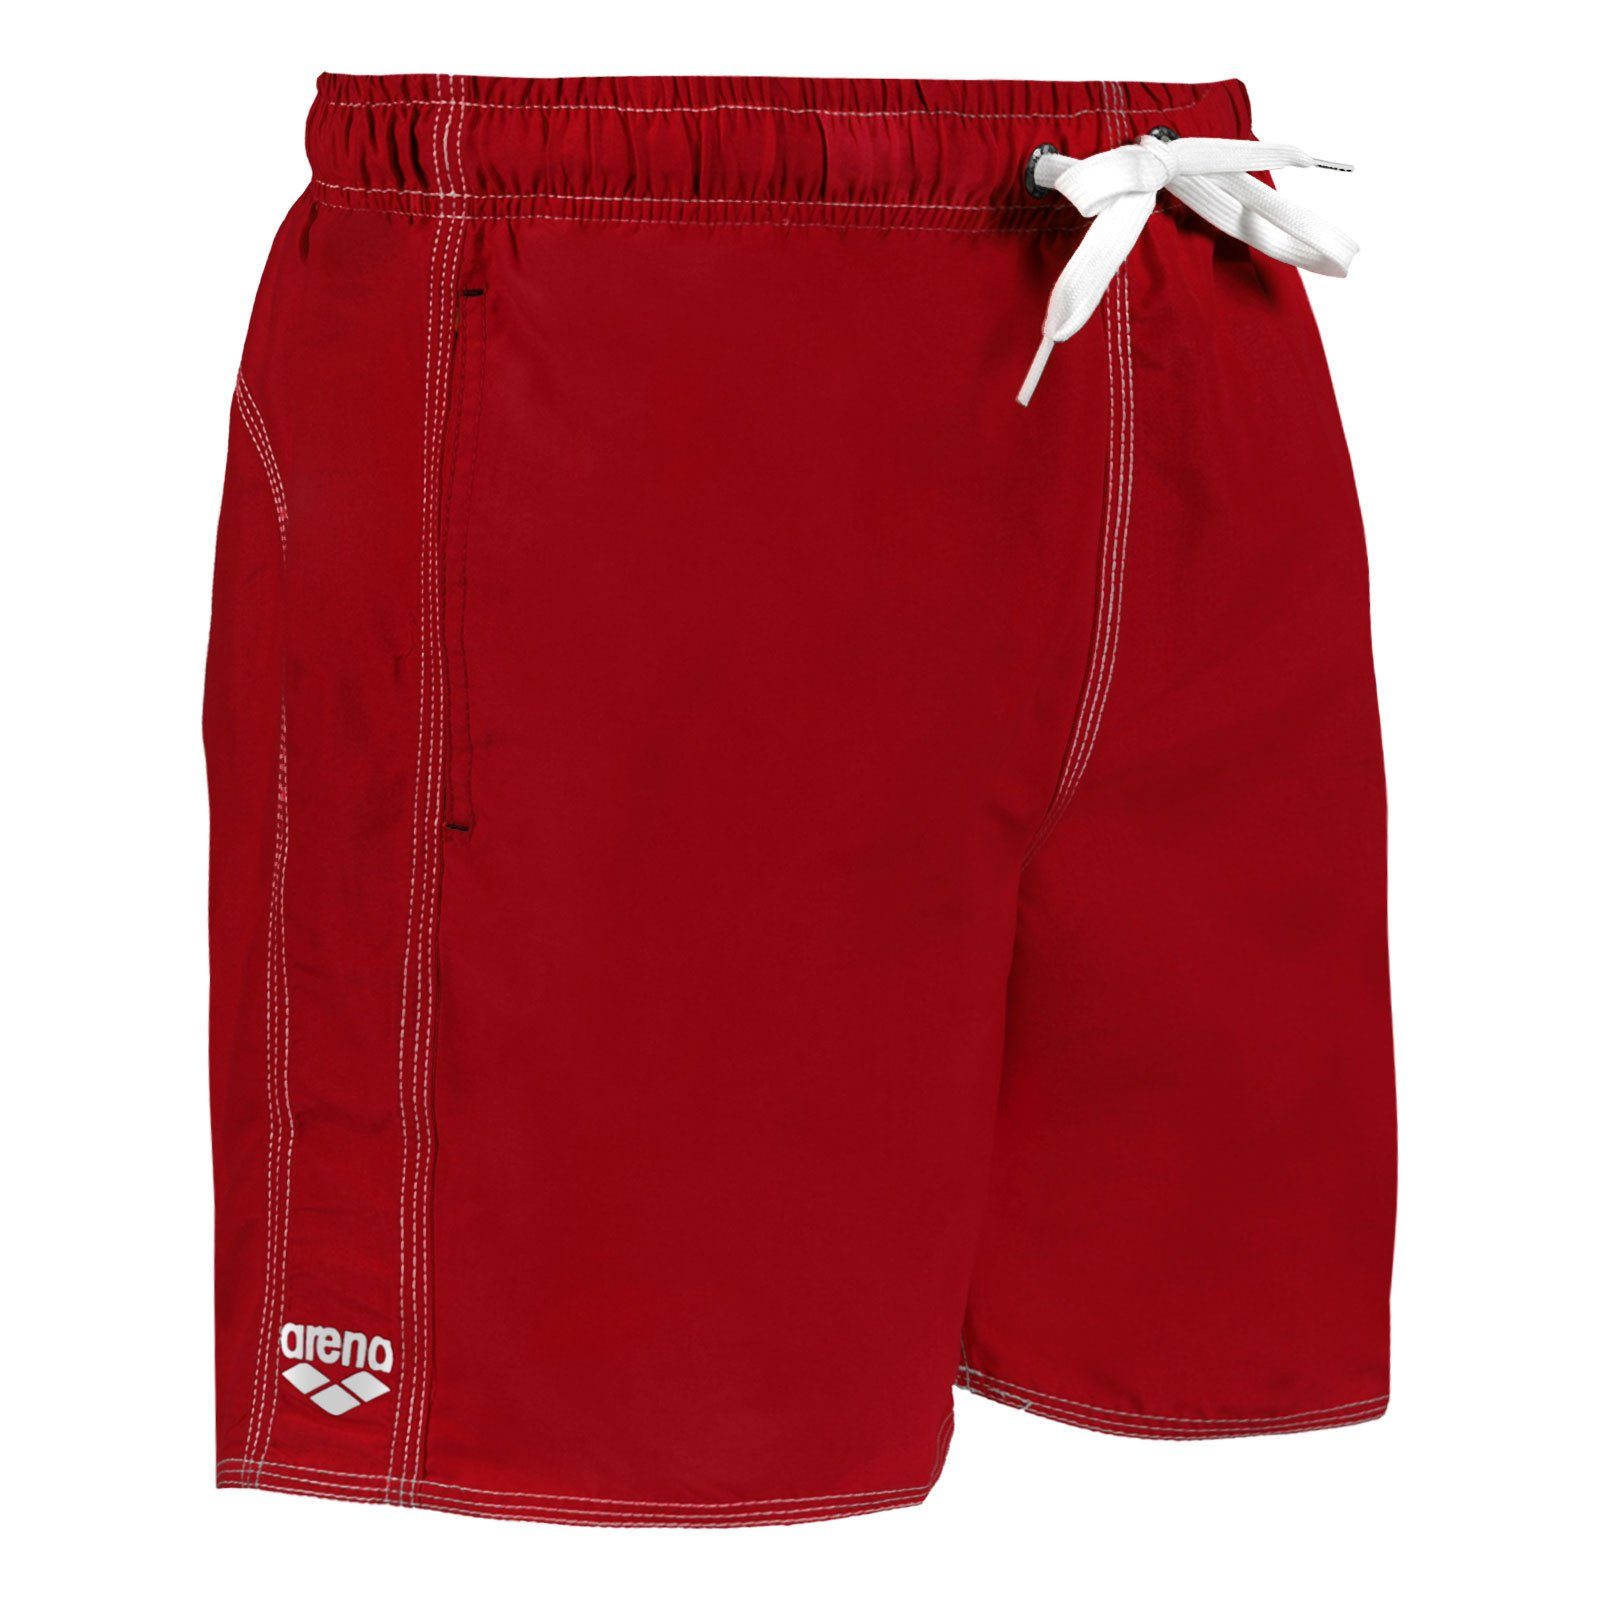 Arena Badehose Fundamentals Solid Boxer in starken Trendfarben 40515-41 red / white